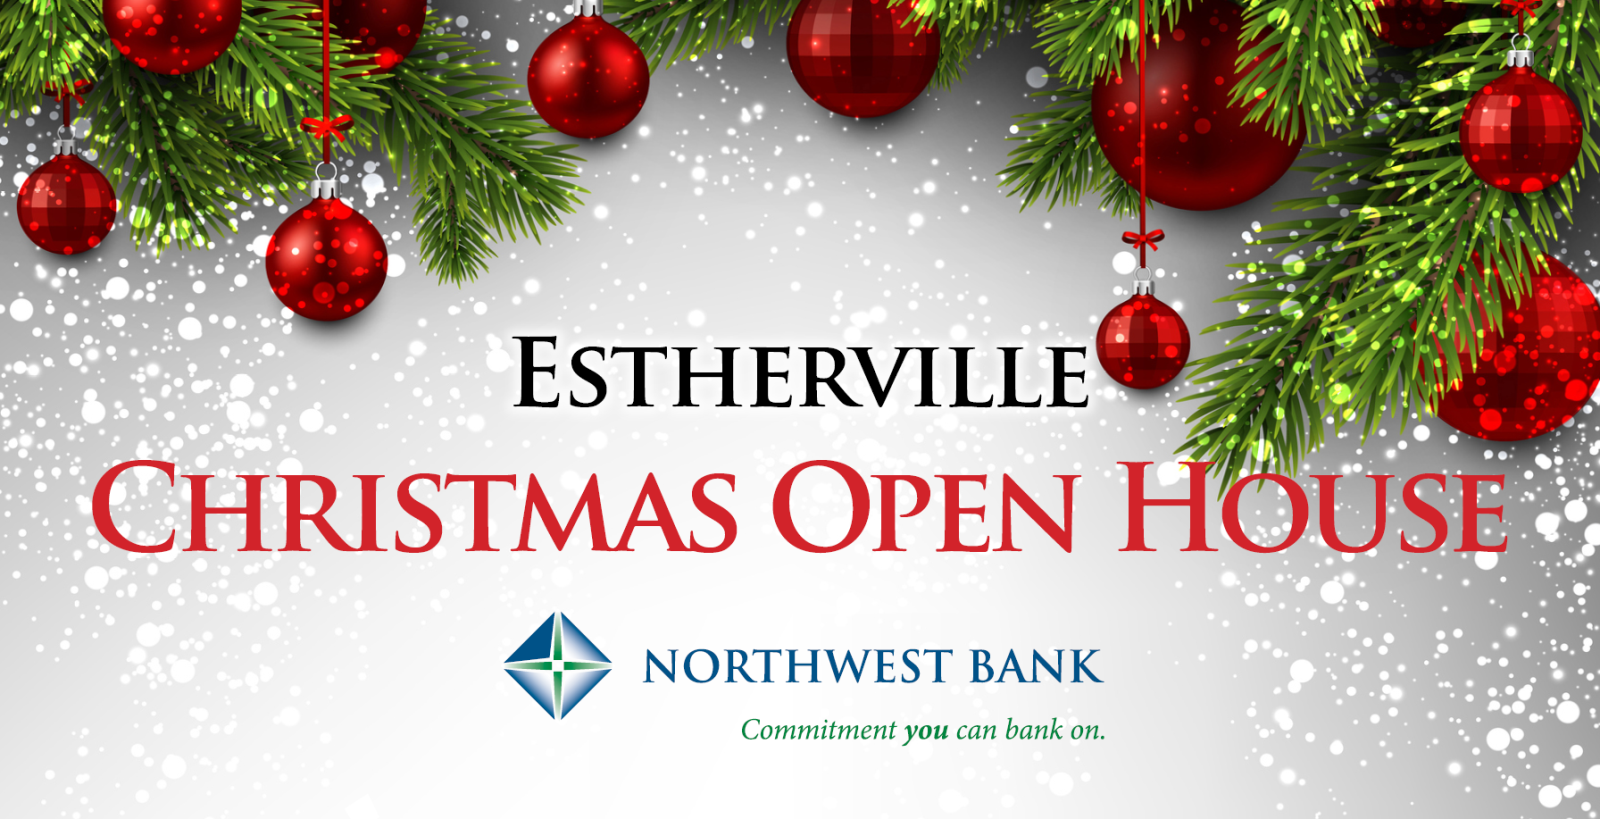 Estherville Christmas Open House